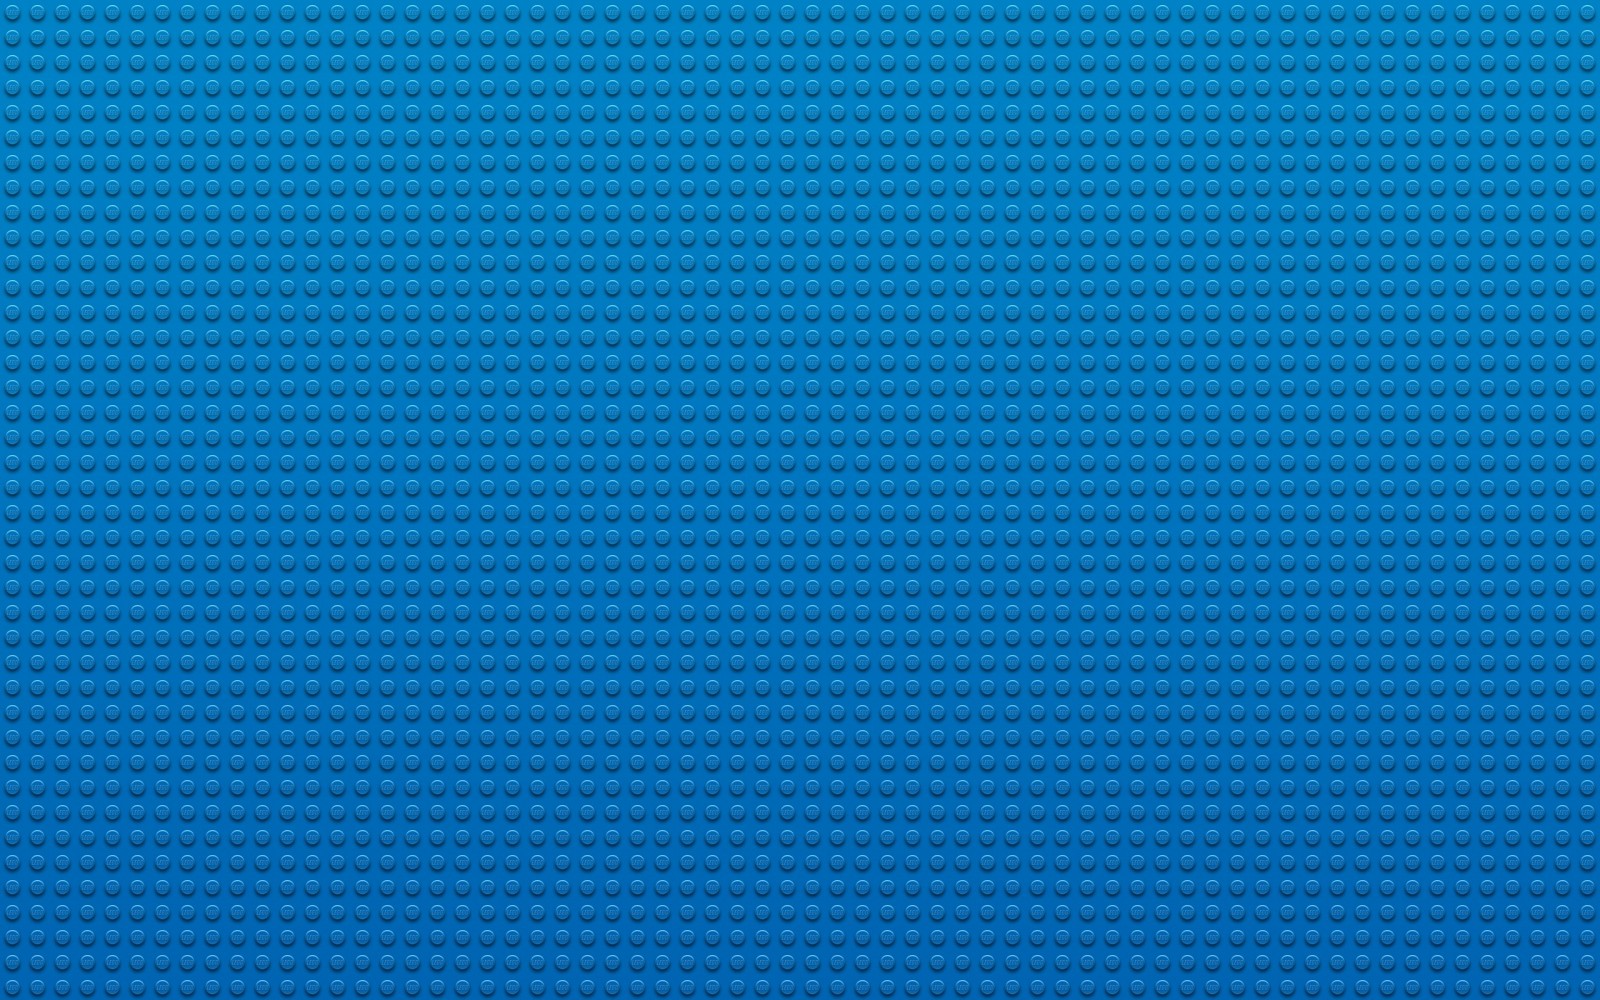 lego_points_circles_blue-773341.jpg!d.jpg